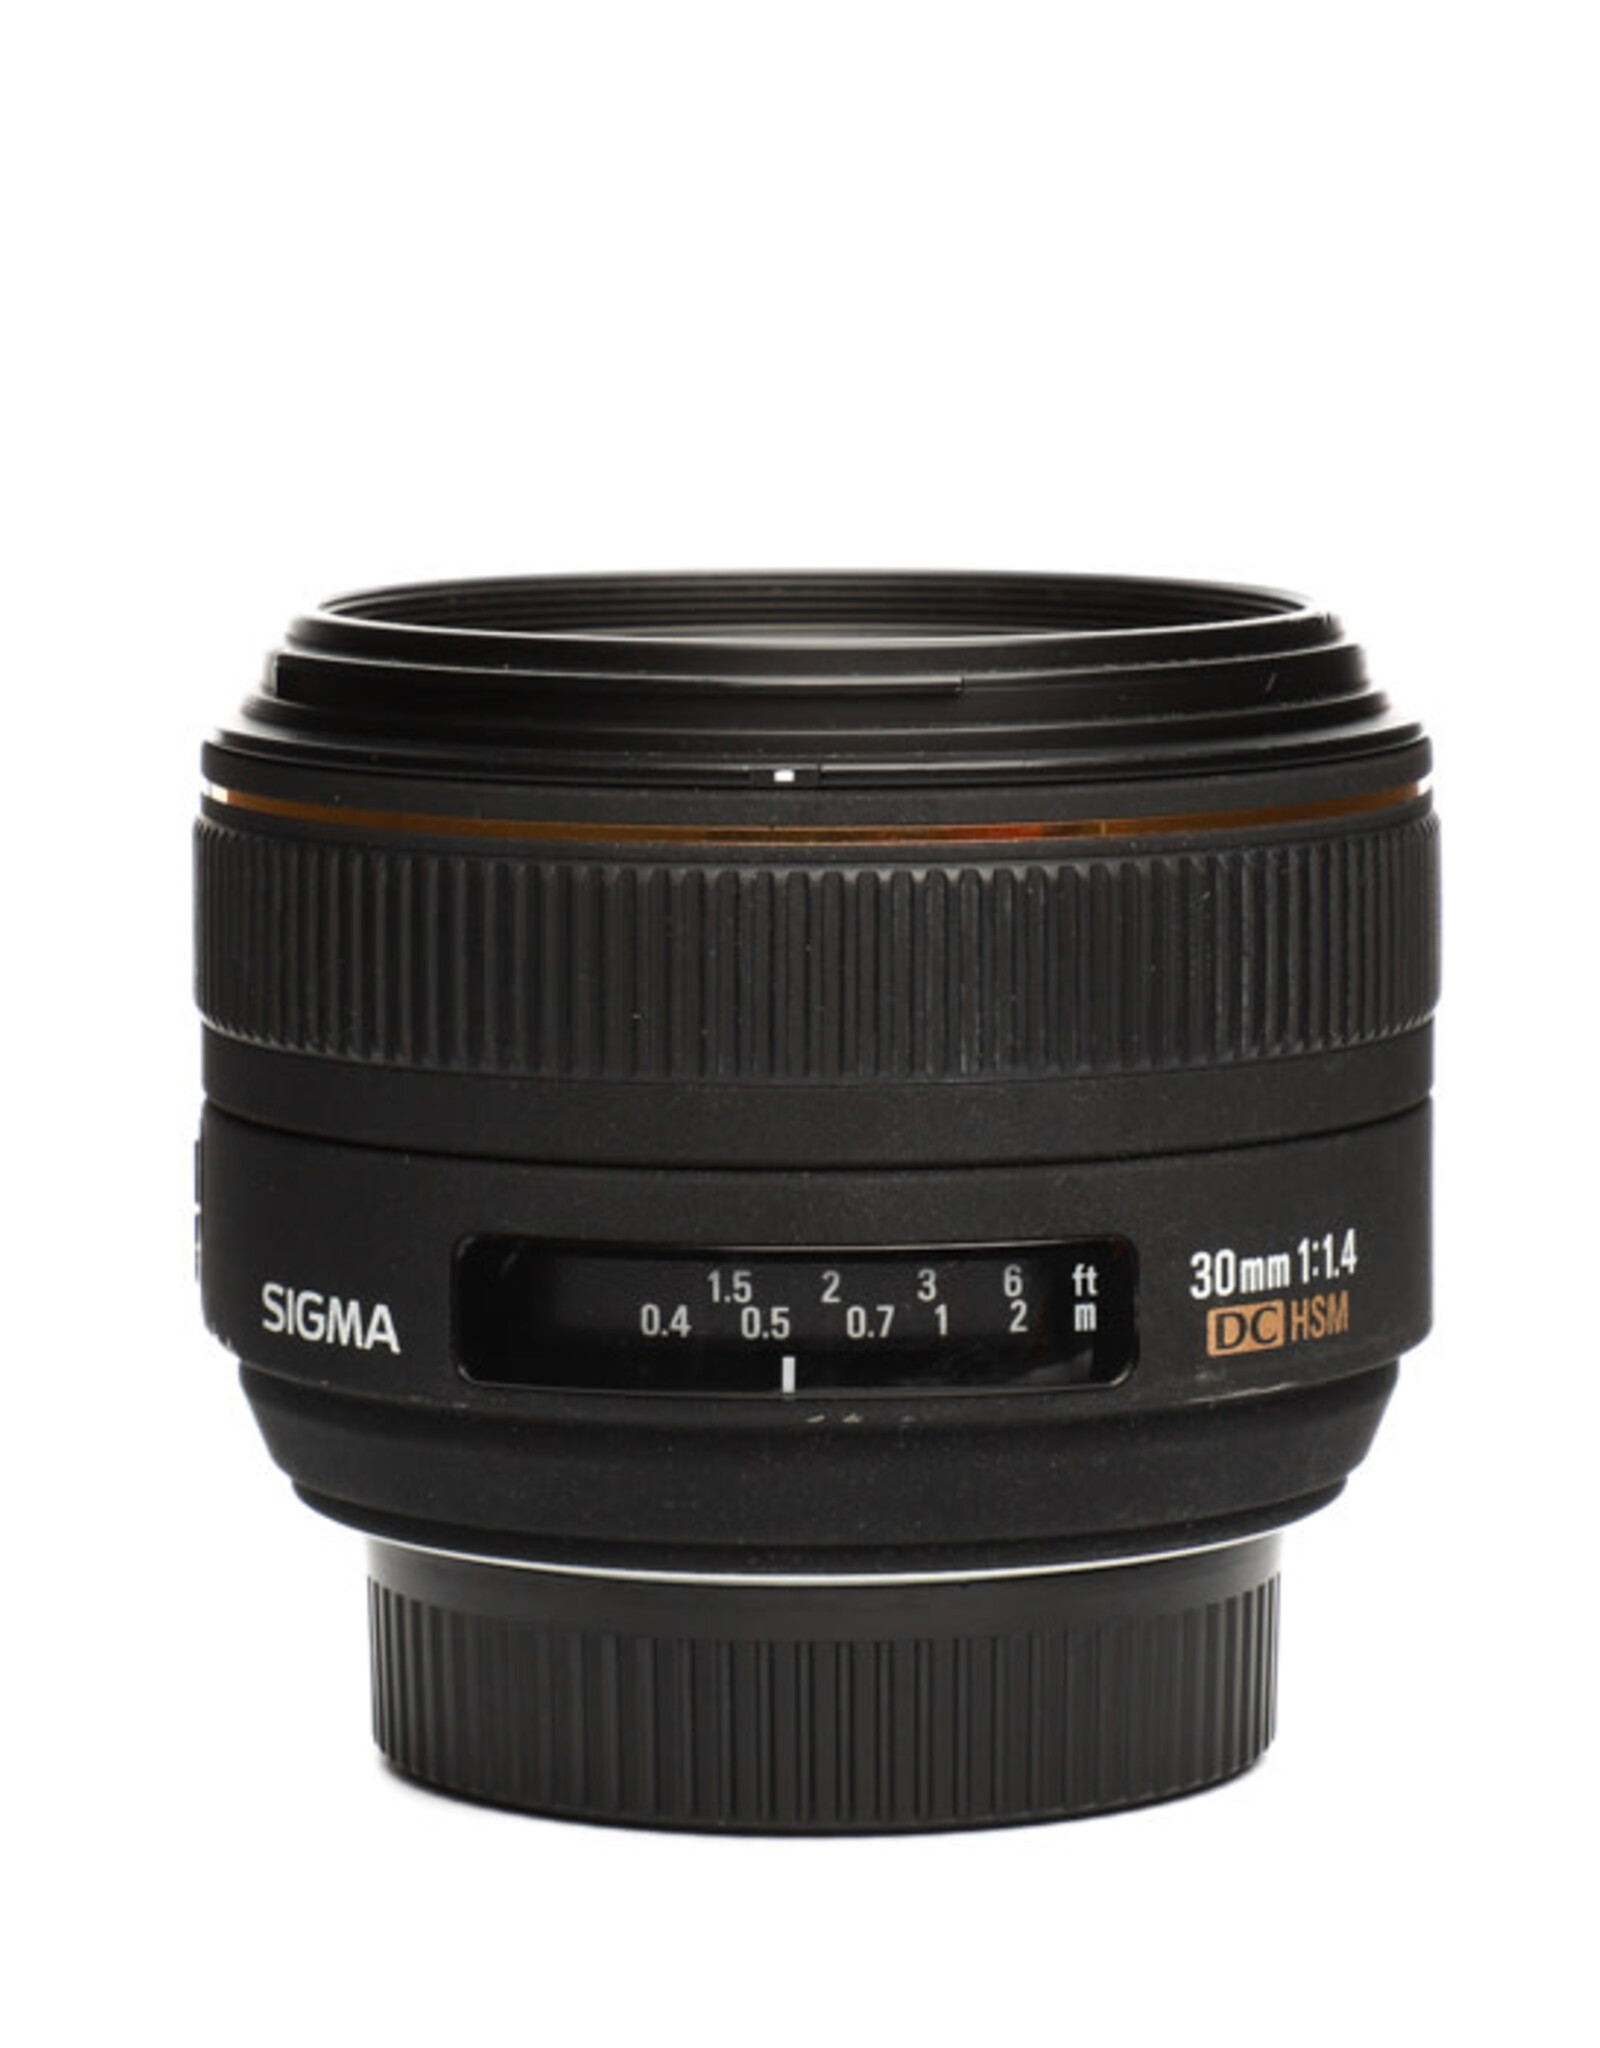 Sigma Sigma 30mm f/1.4 EX DC HSM Lens for Nikon DX